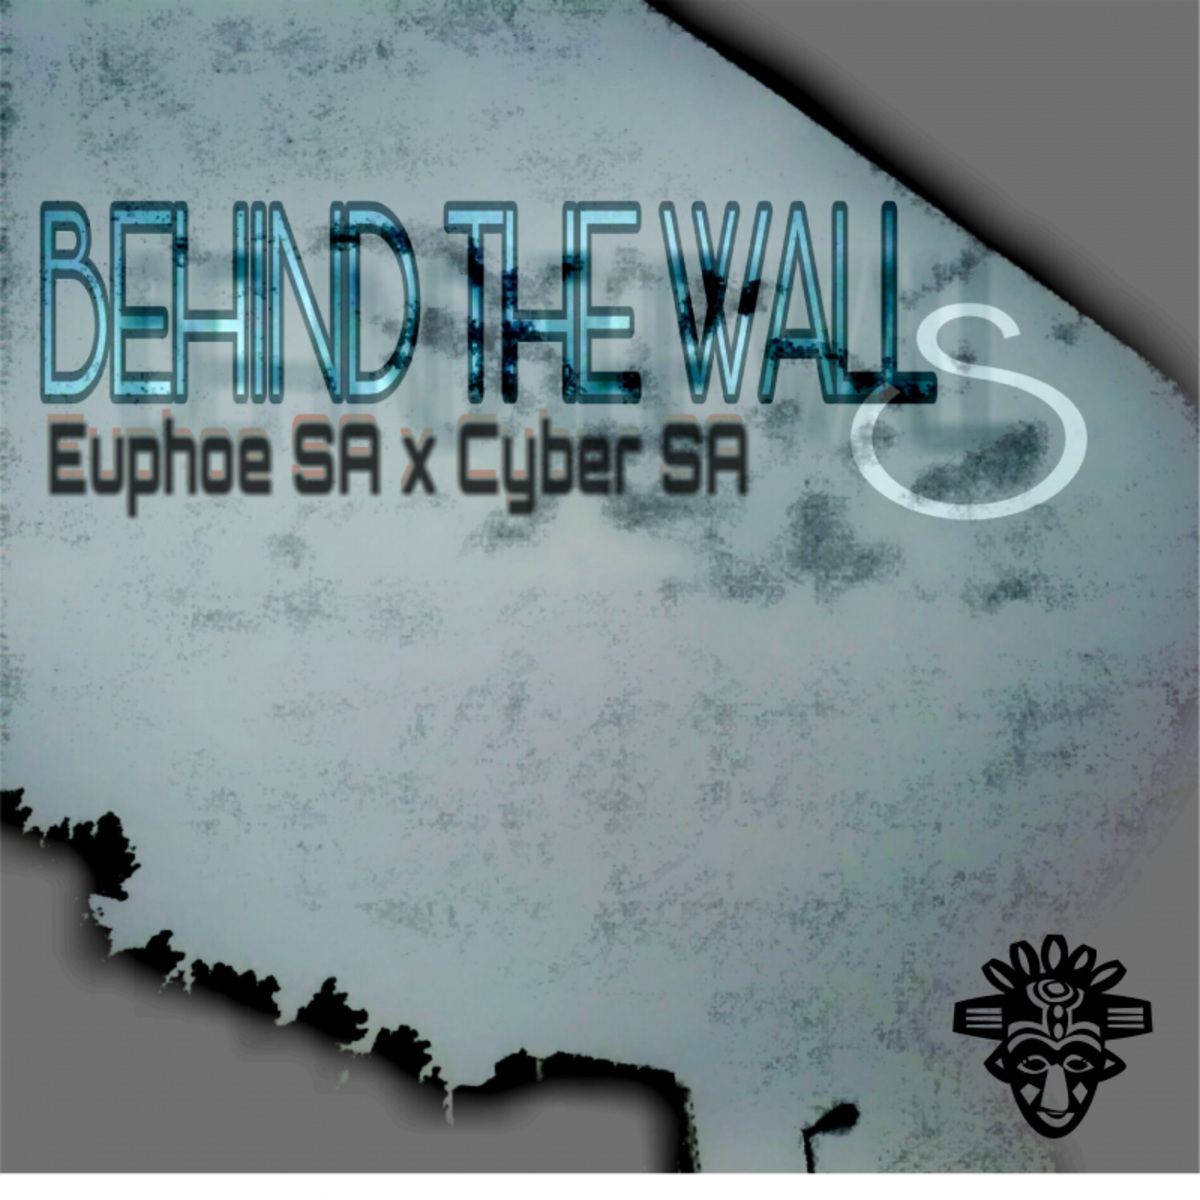 CyberSA, Euphoe SA - Behind The Walls / 3Sugarz Record Label pty ltd